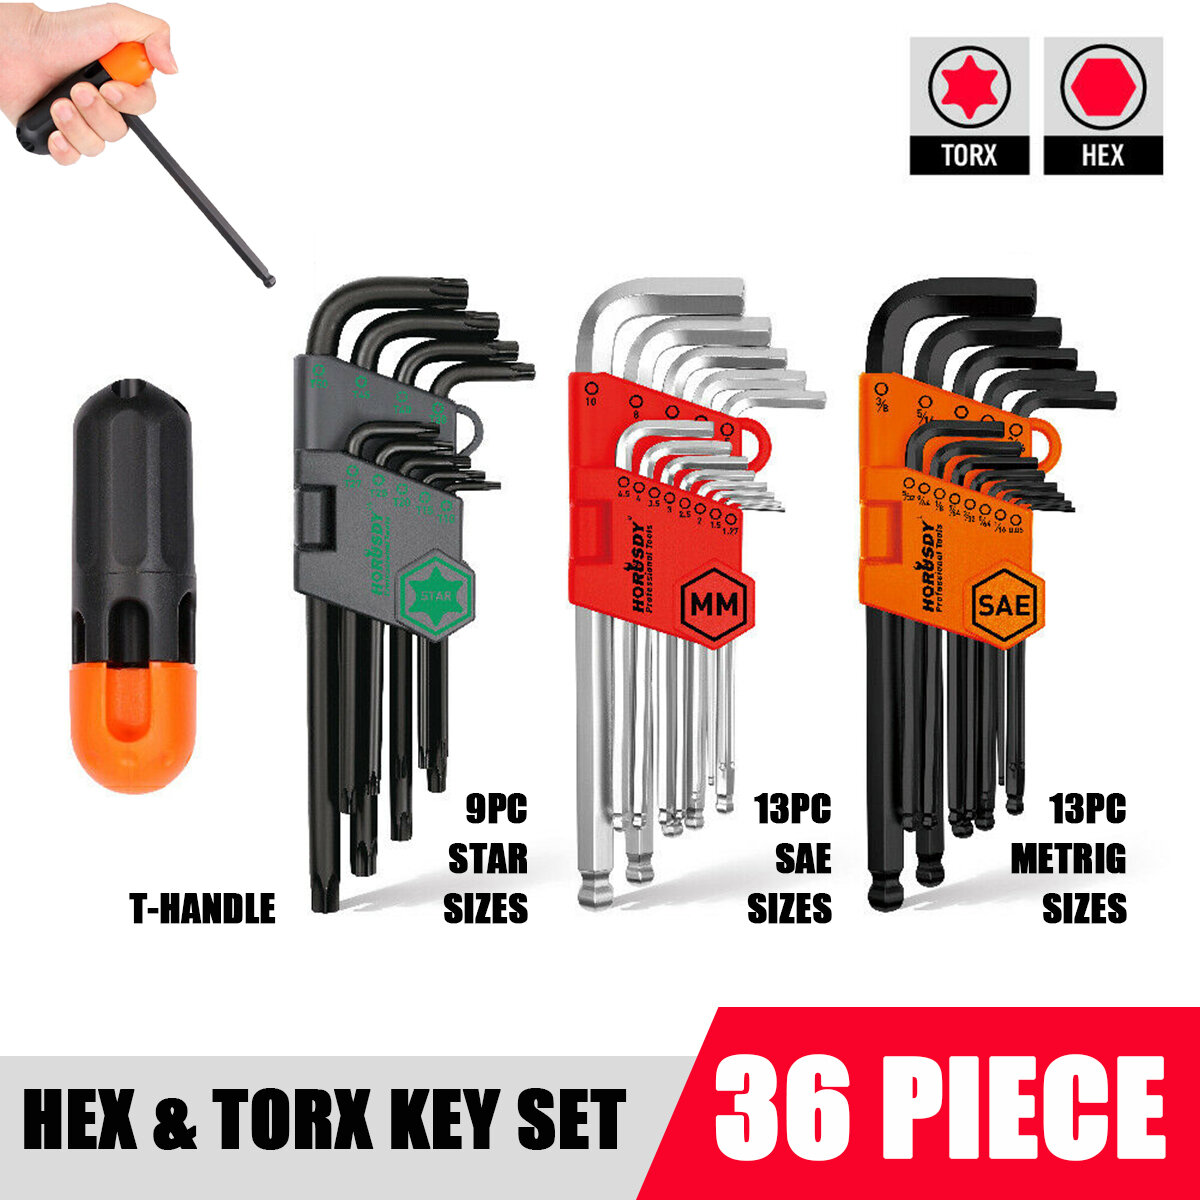 

36Pcs Hex Key / Temper Proof Torx Key Set Ball-End Allen Гаечный ключ Метрическая и британская система мер